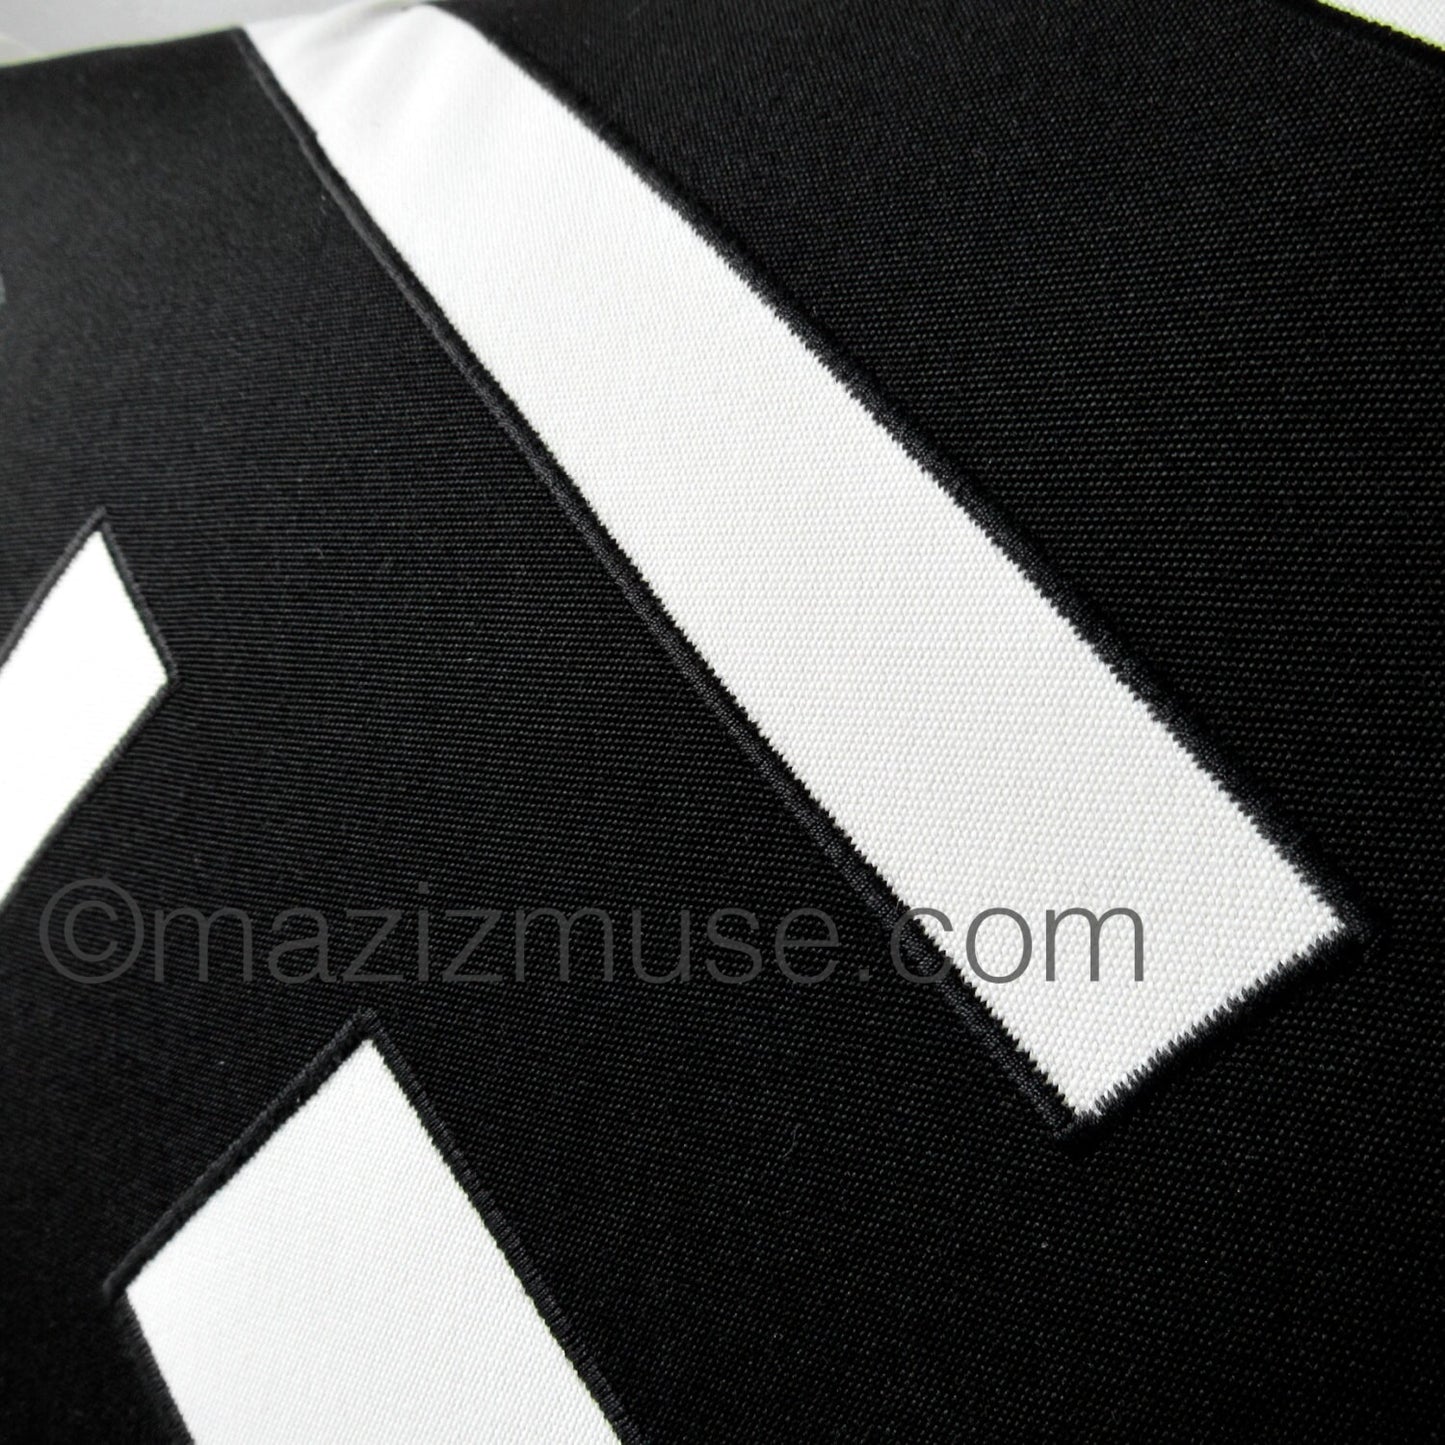 Decorative Black & White Geometric Pillow Cover, Modern Sunbrella Pinwheel